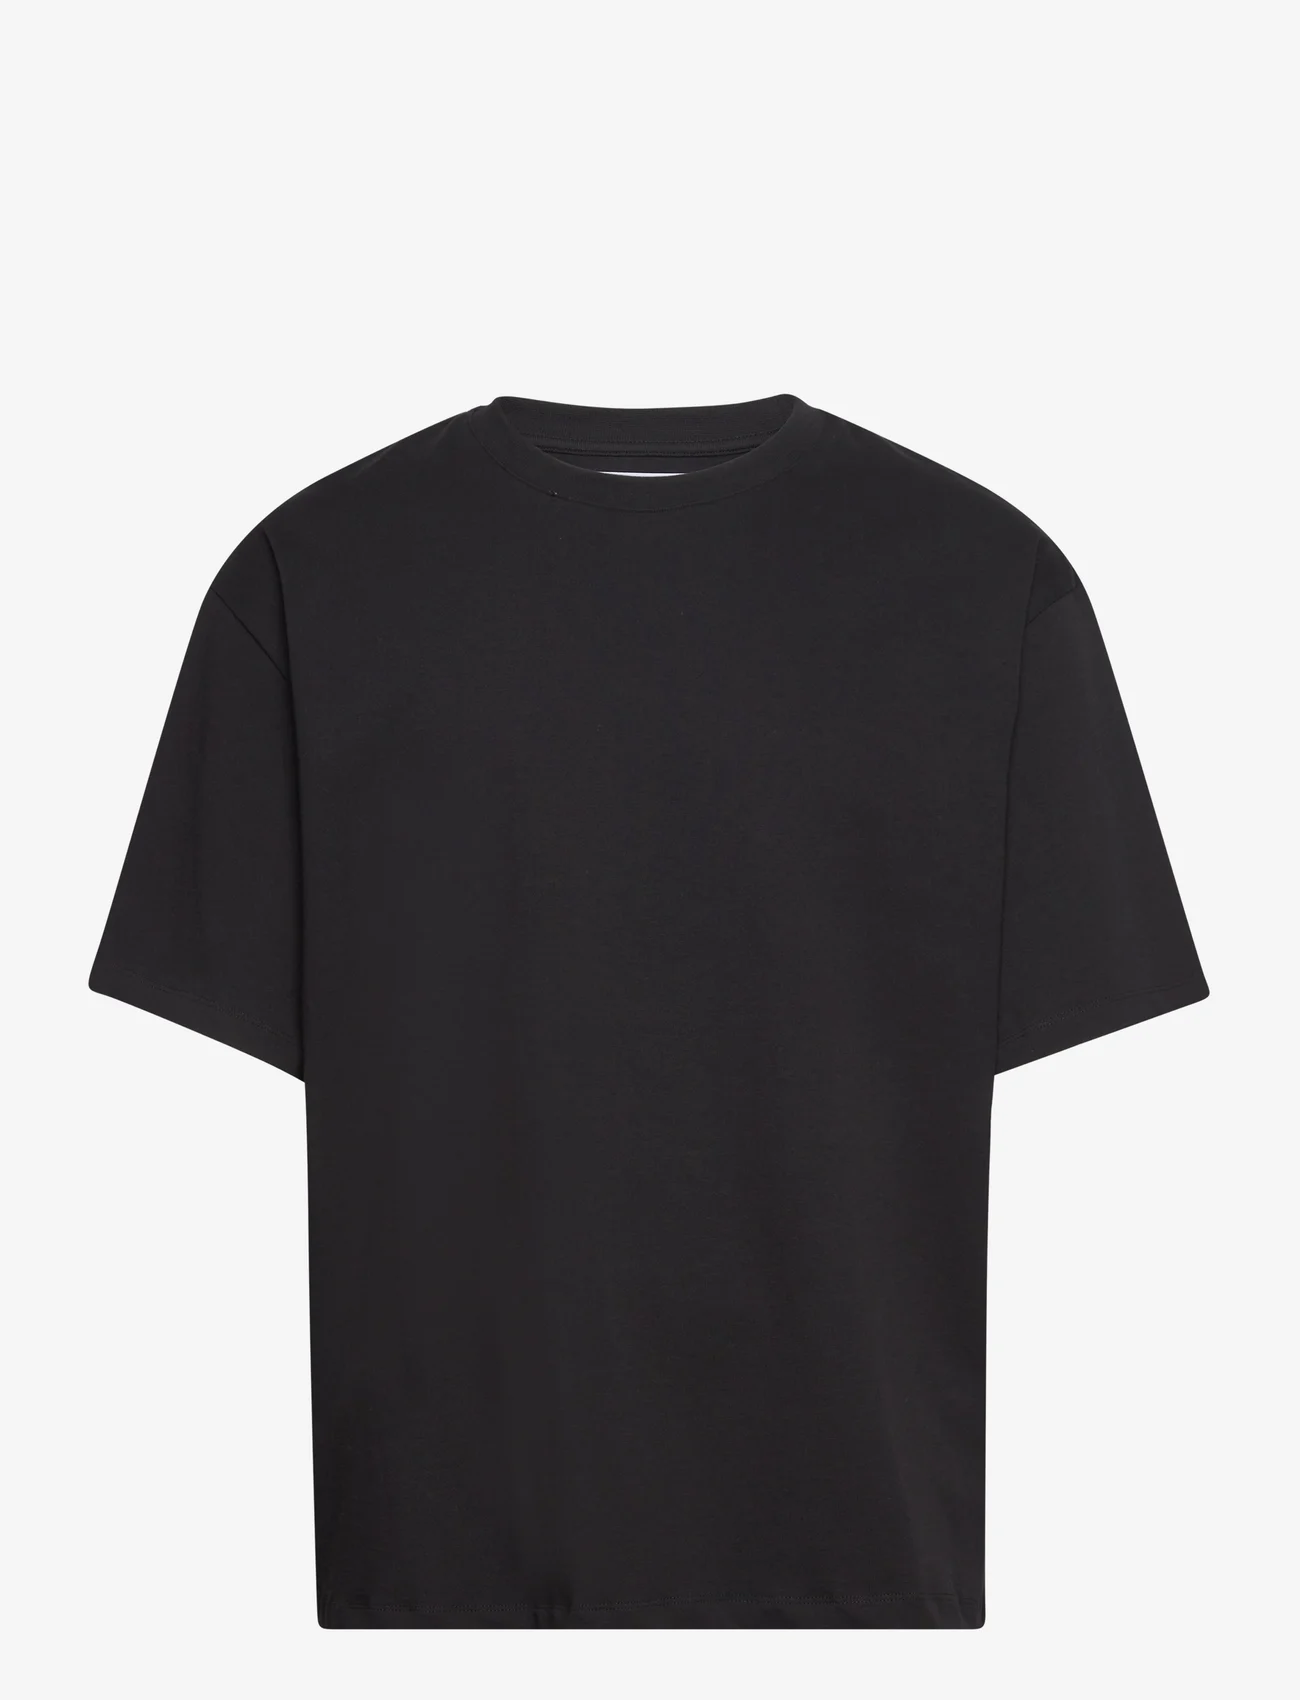 Garment Project - GP Heavy Tee - Black - kortermede t-skjorter - black - 0